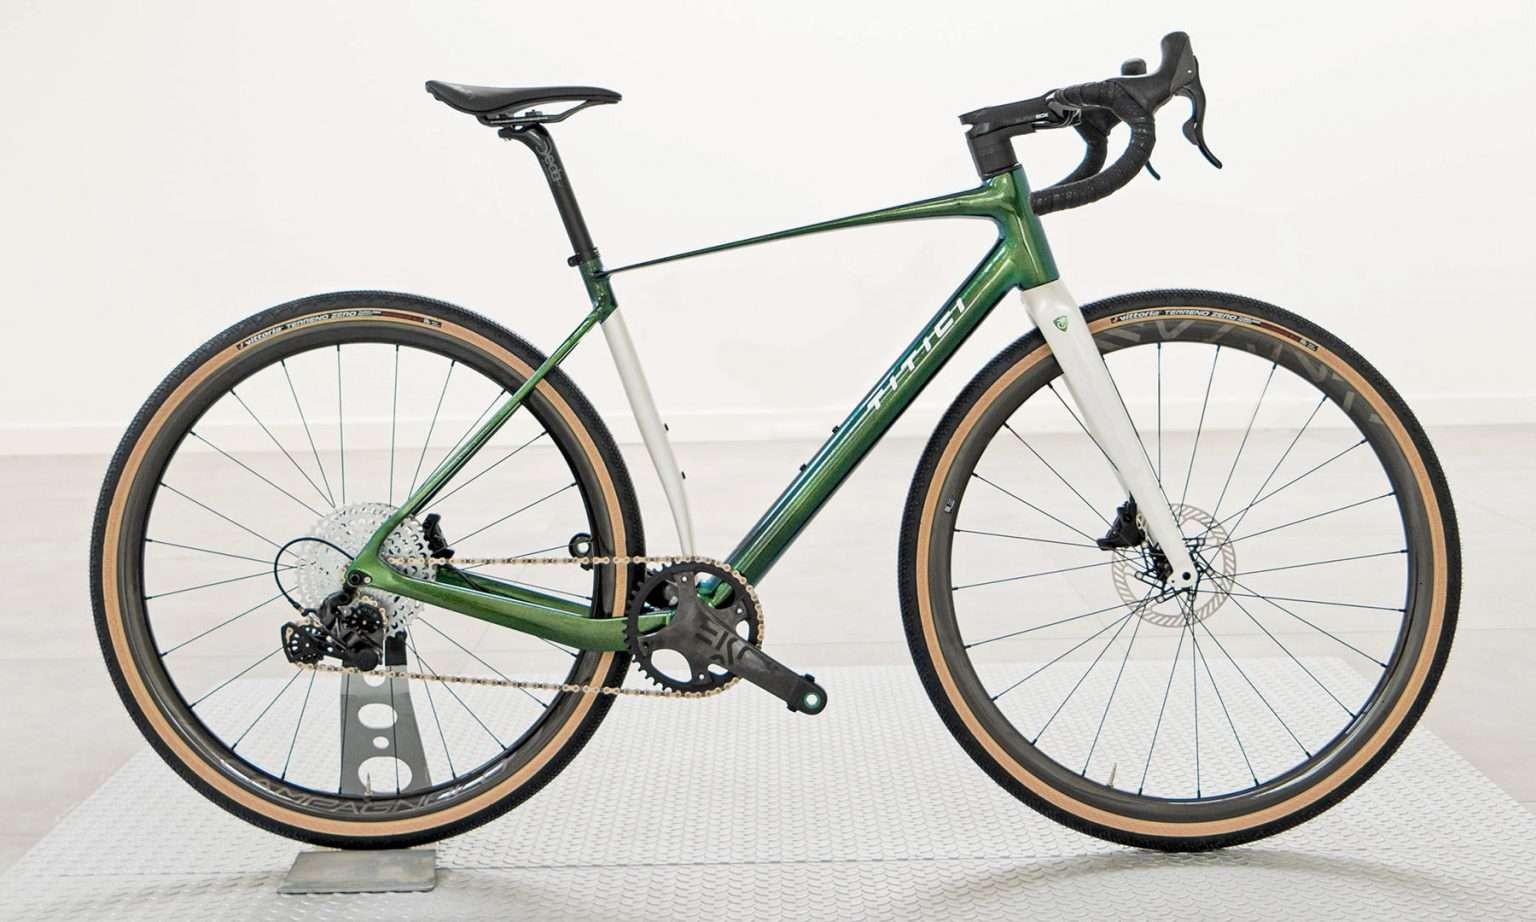 Titici Relli sepeda gravel high end custom made sesuai ukuran tubuh cyclist. (Foto: Istimewa)